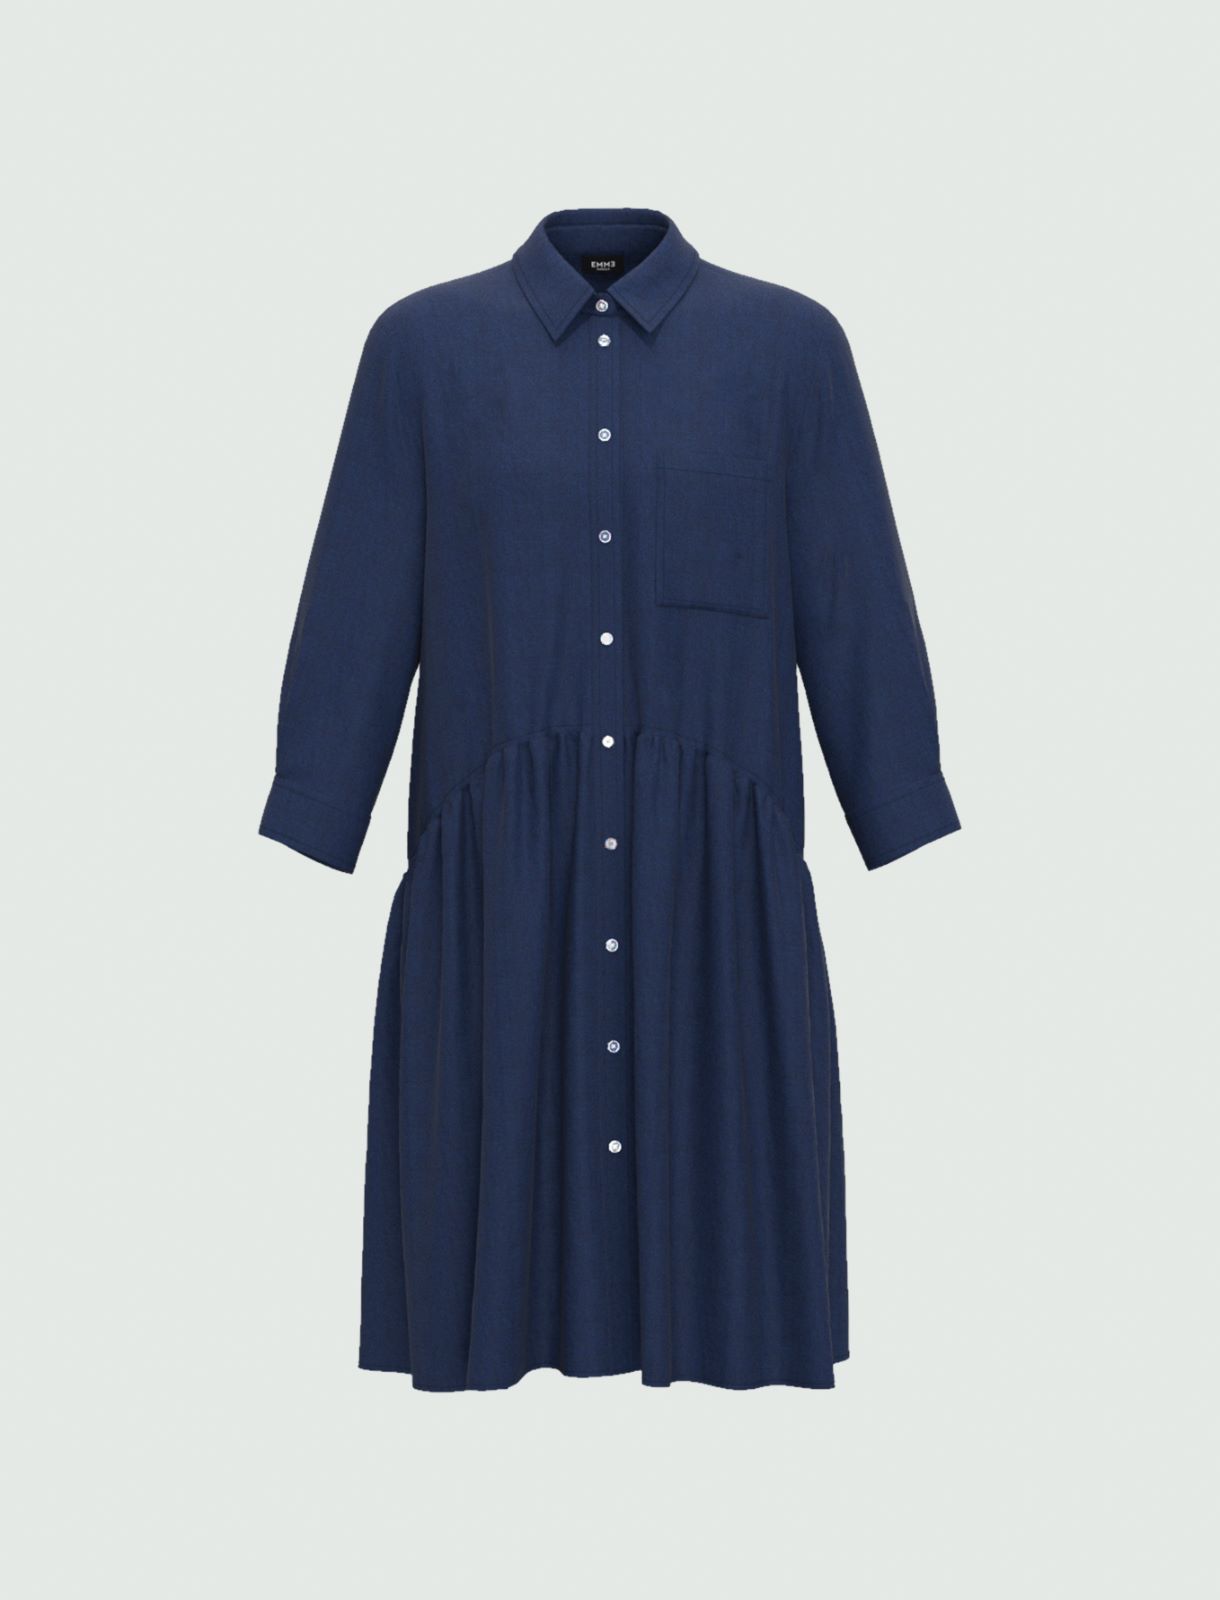 Shirt dress - Blue jeans - Marina Rinaldi - 4